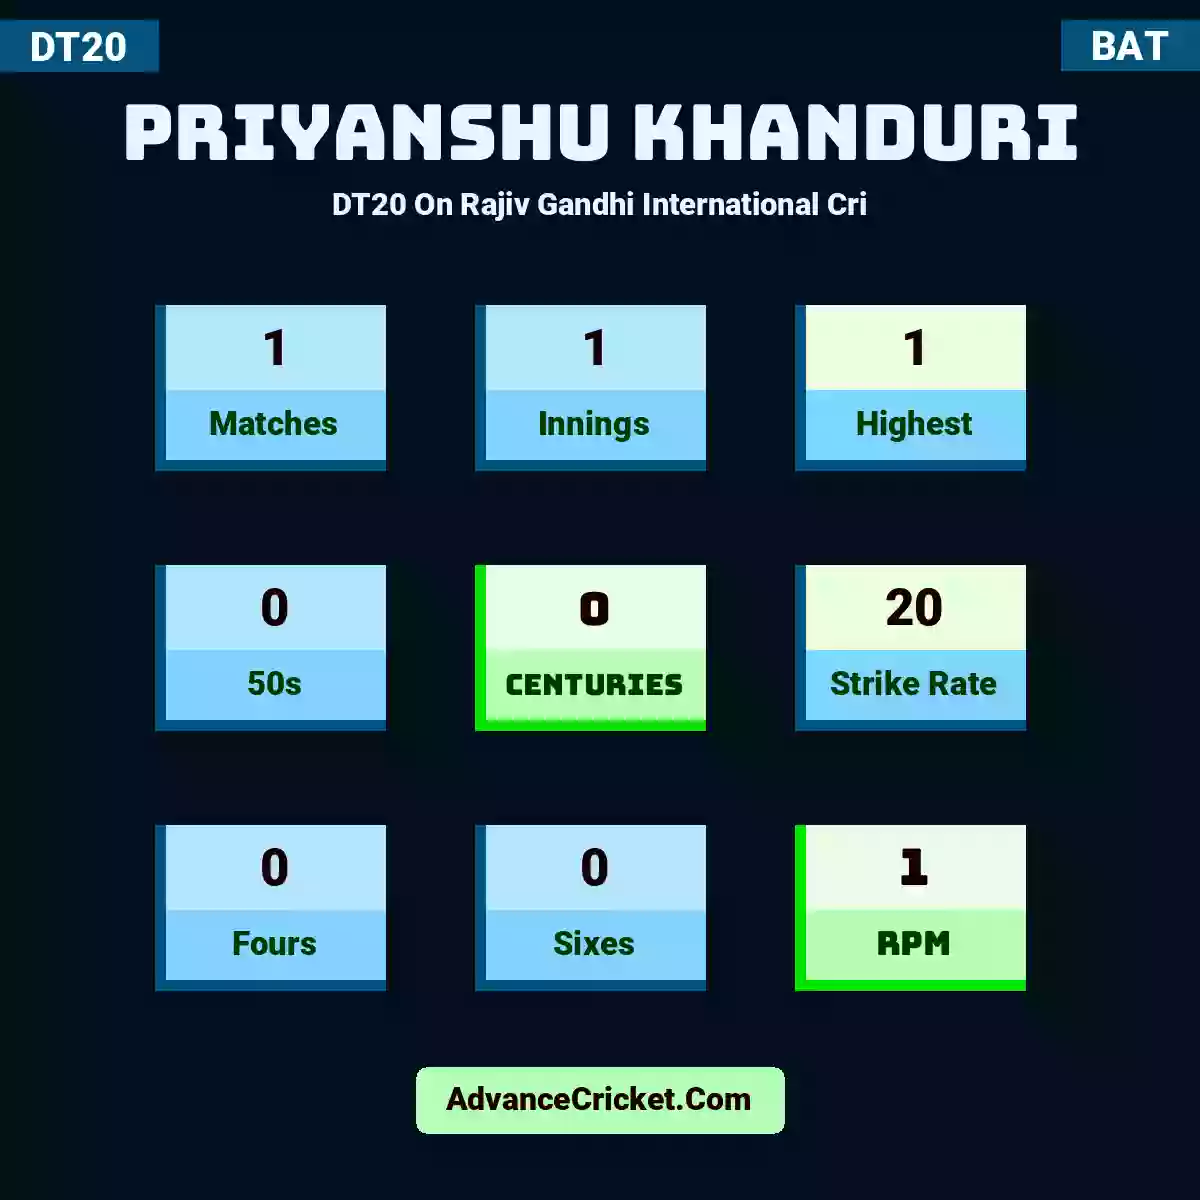 Priyanshu Khanduri DT20  On Rajiv Gandhi International Cri, Priyanshu Khanduri played 1 matches, scored 1 runs as highest, 0 half-centuries, and 0 centuries, with a strike rate of 20. P.Khanduri hit 0 fours and 0 sixes, with an RPM of 1.